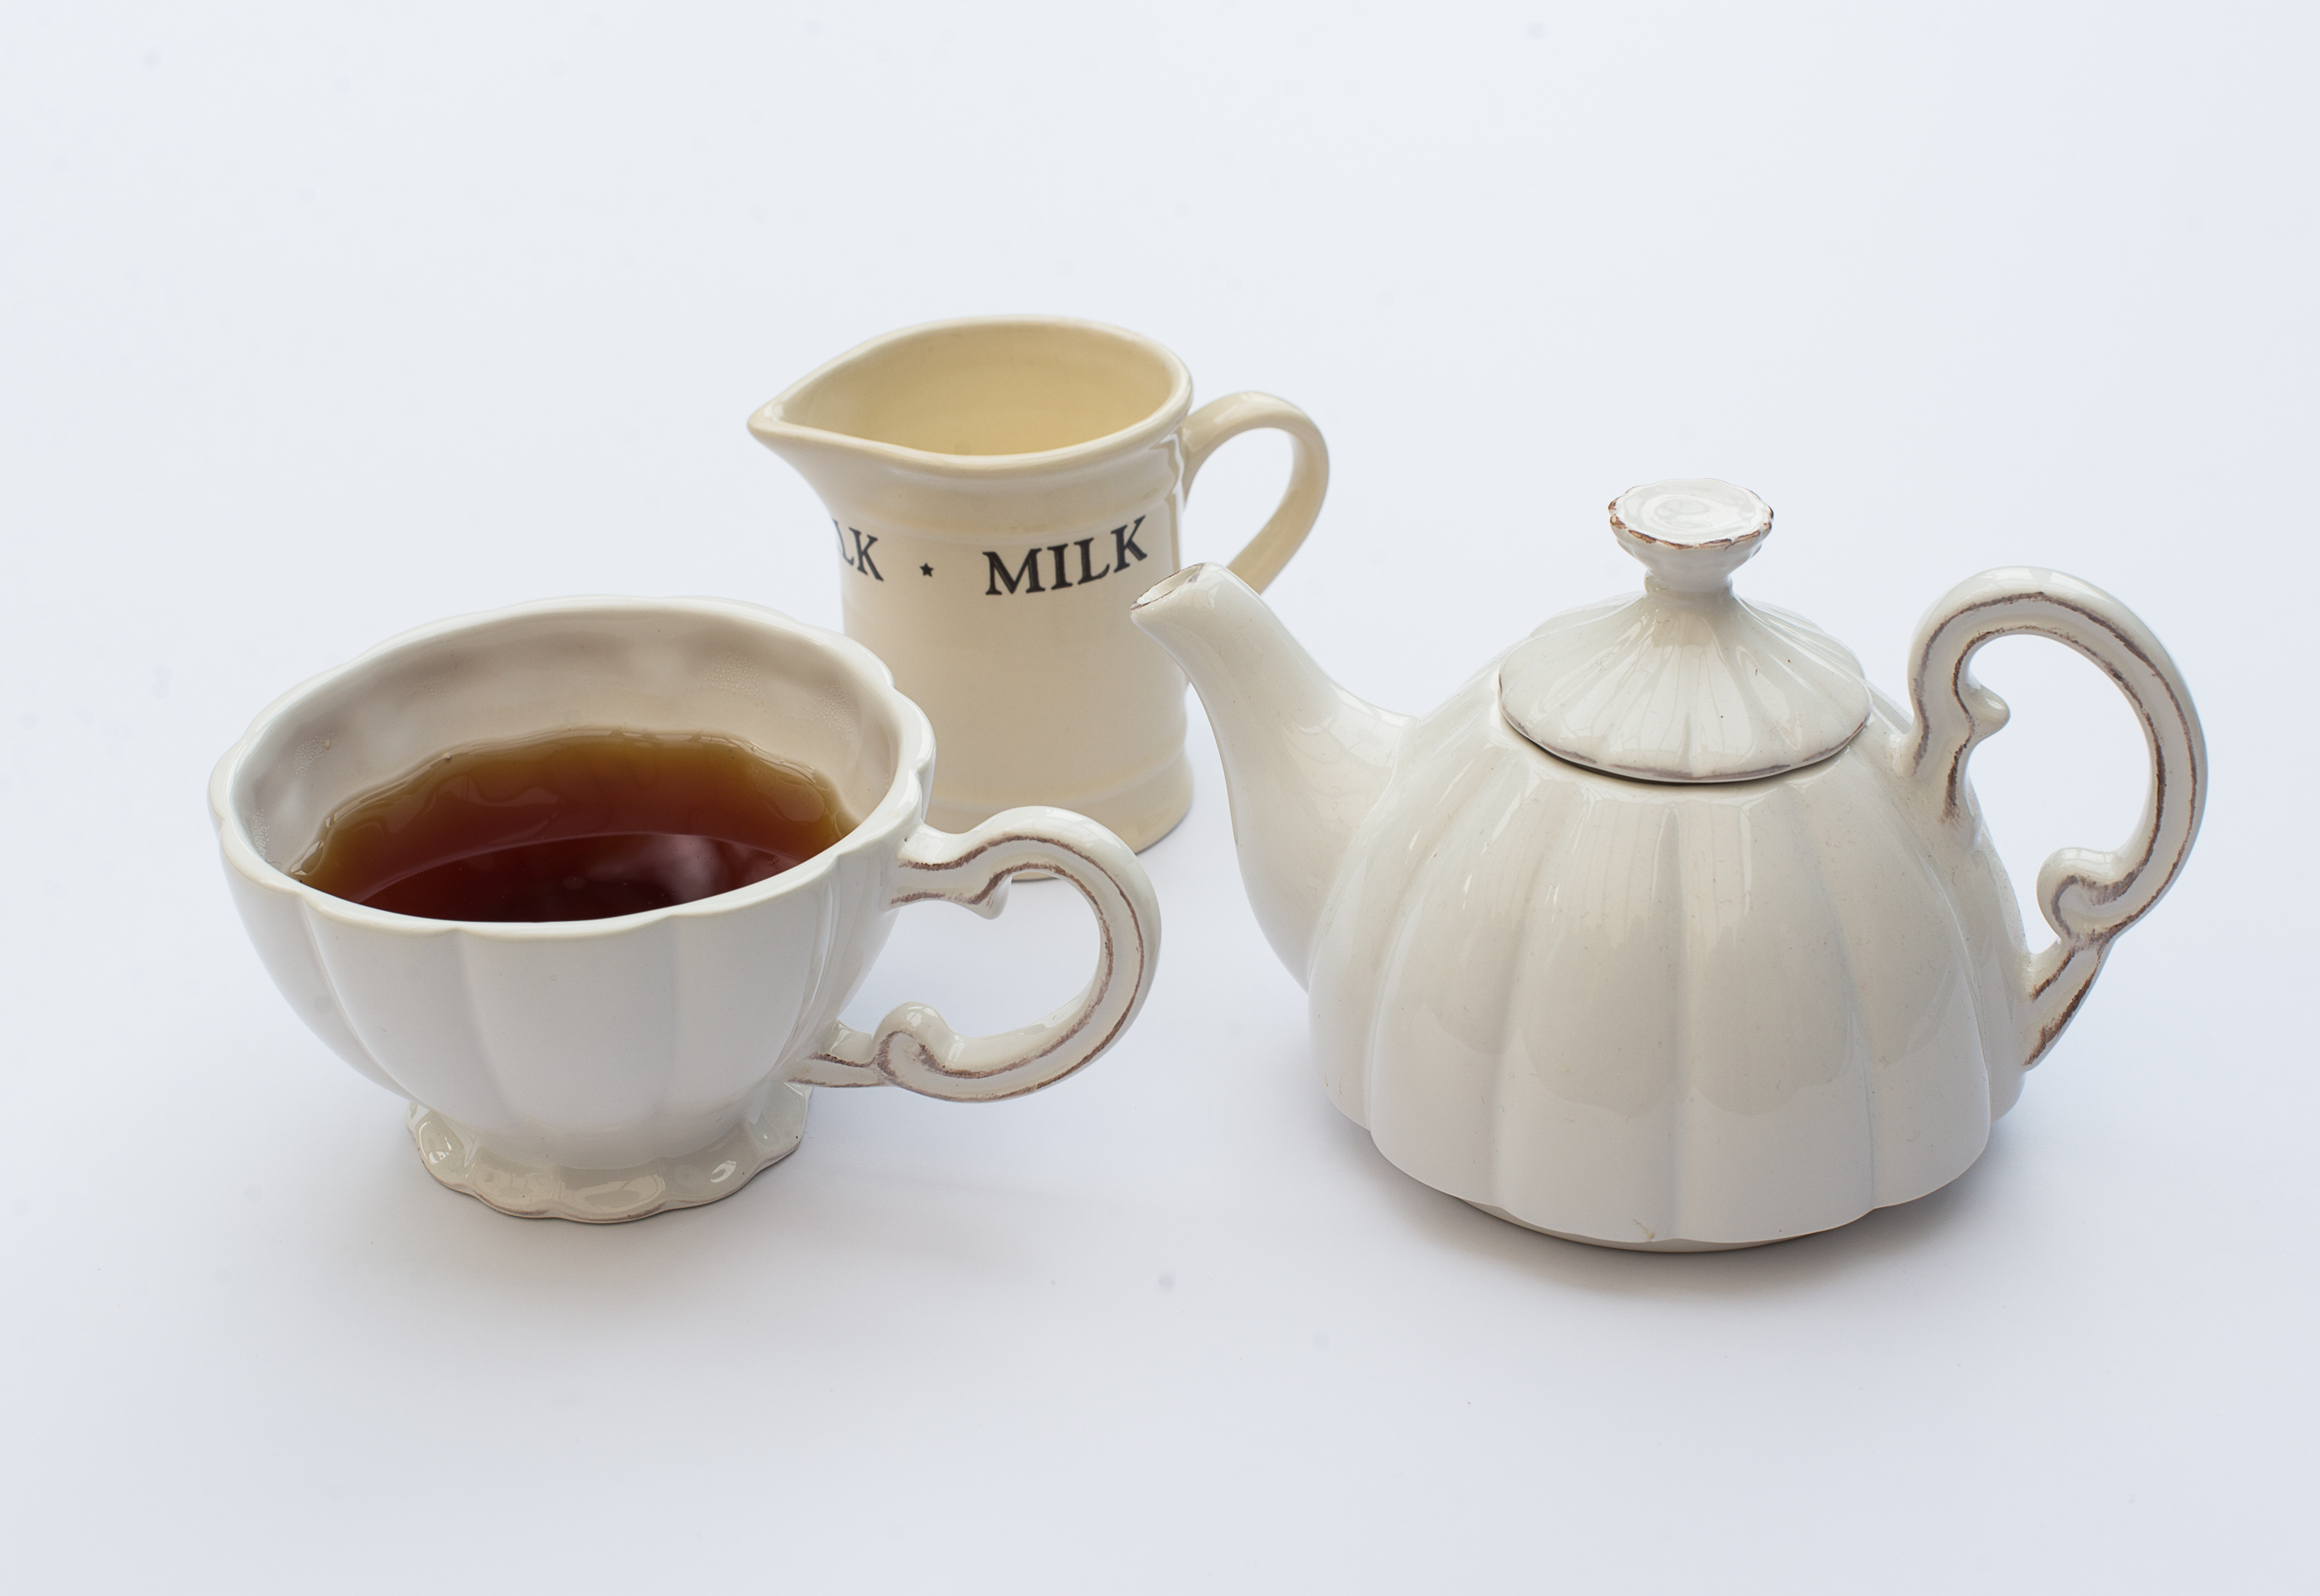 A cup of black tea with milk jug and tea pot by www.englishcreamtea.com